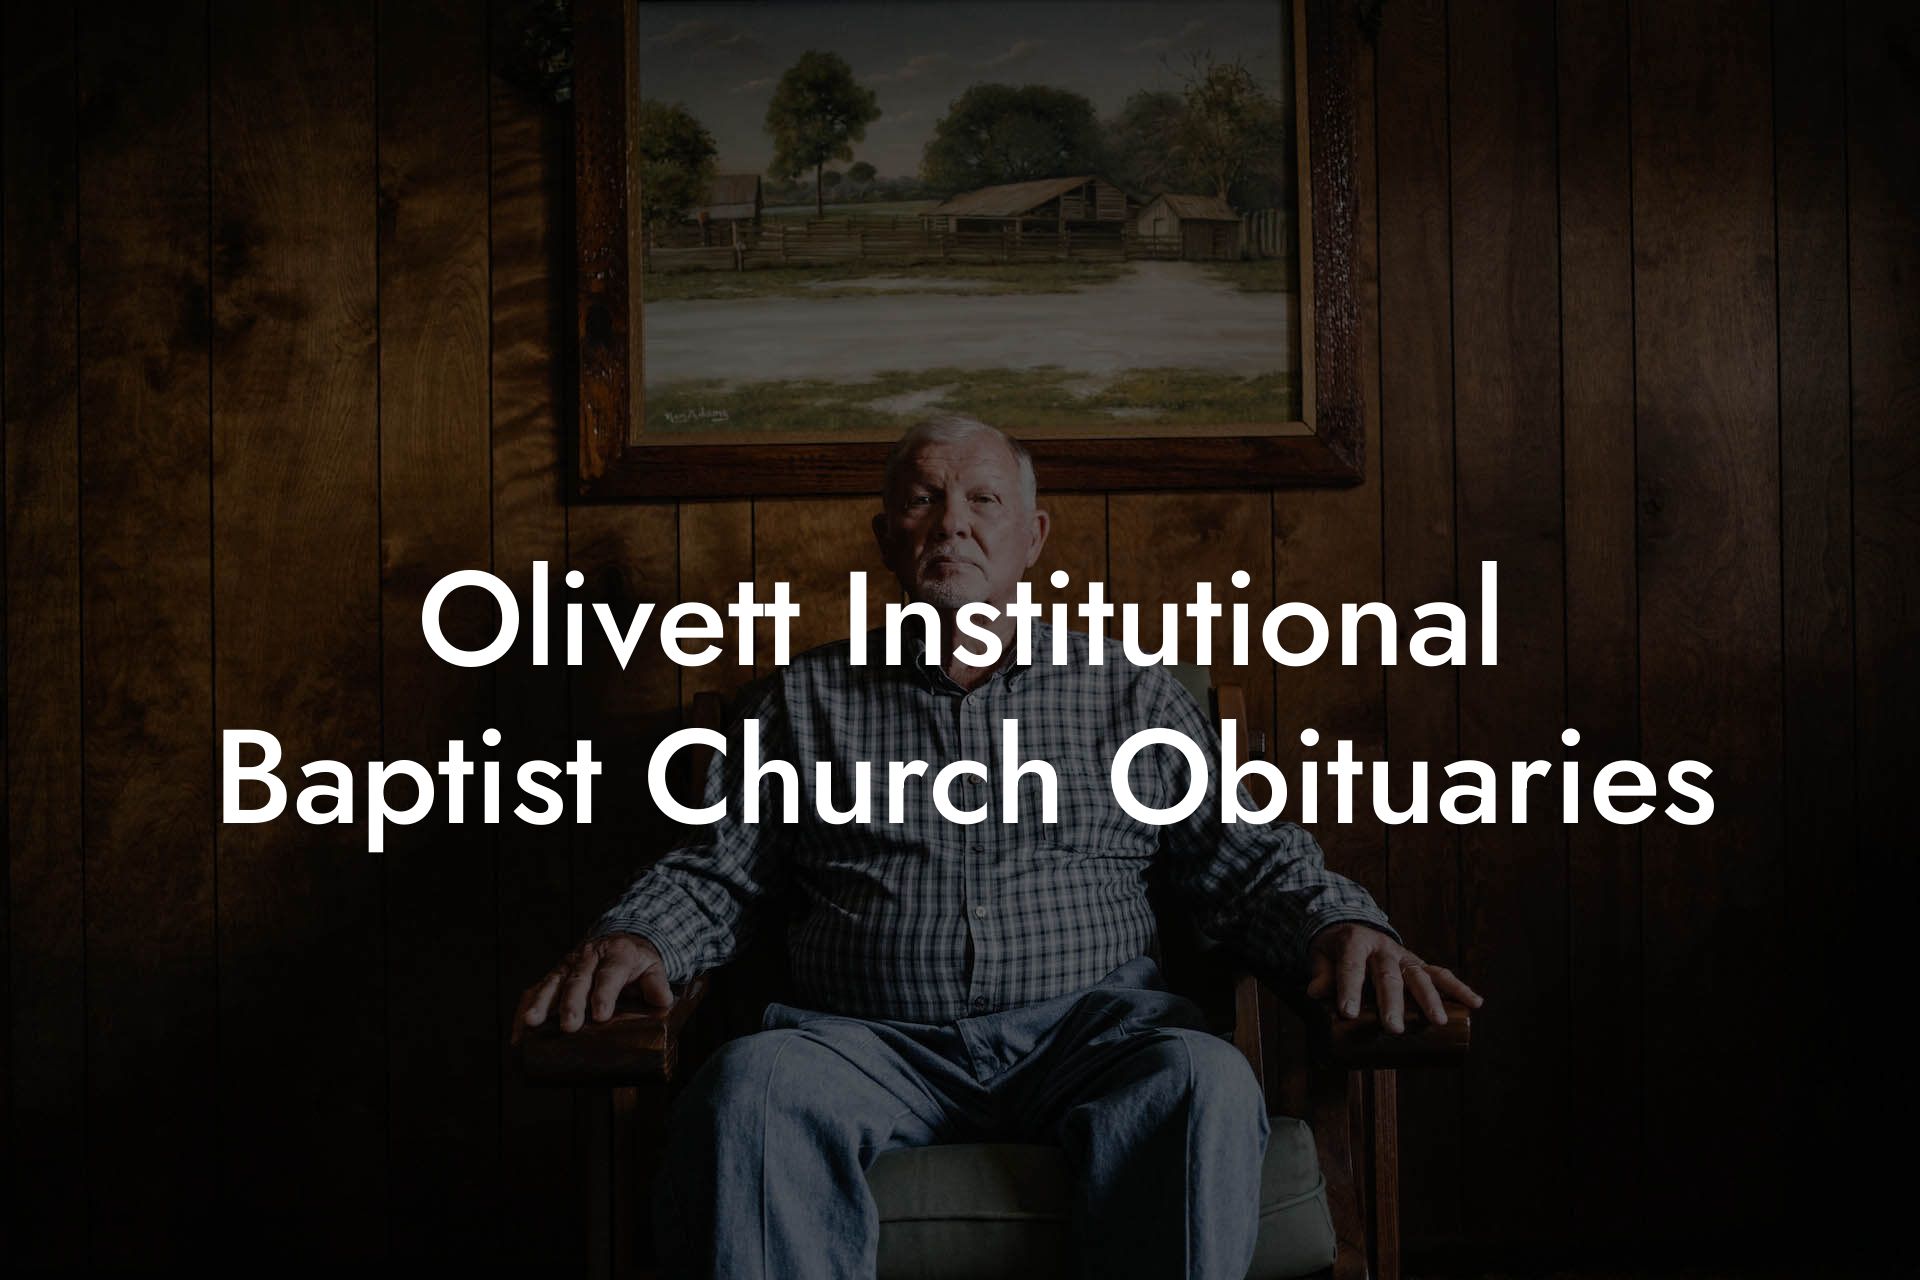 Olivett Institutional Baptist Church Obituaries